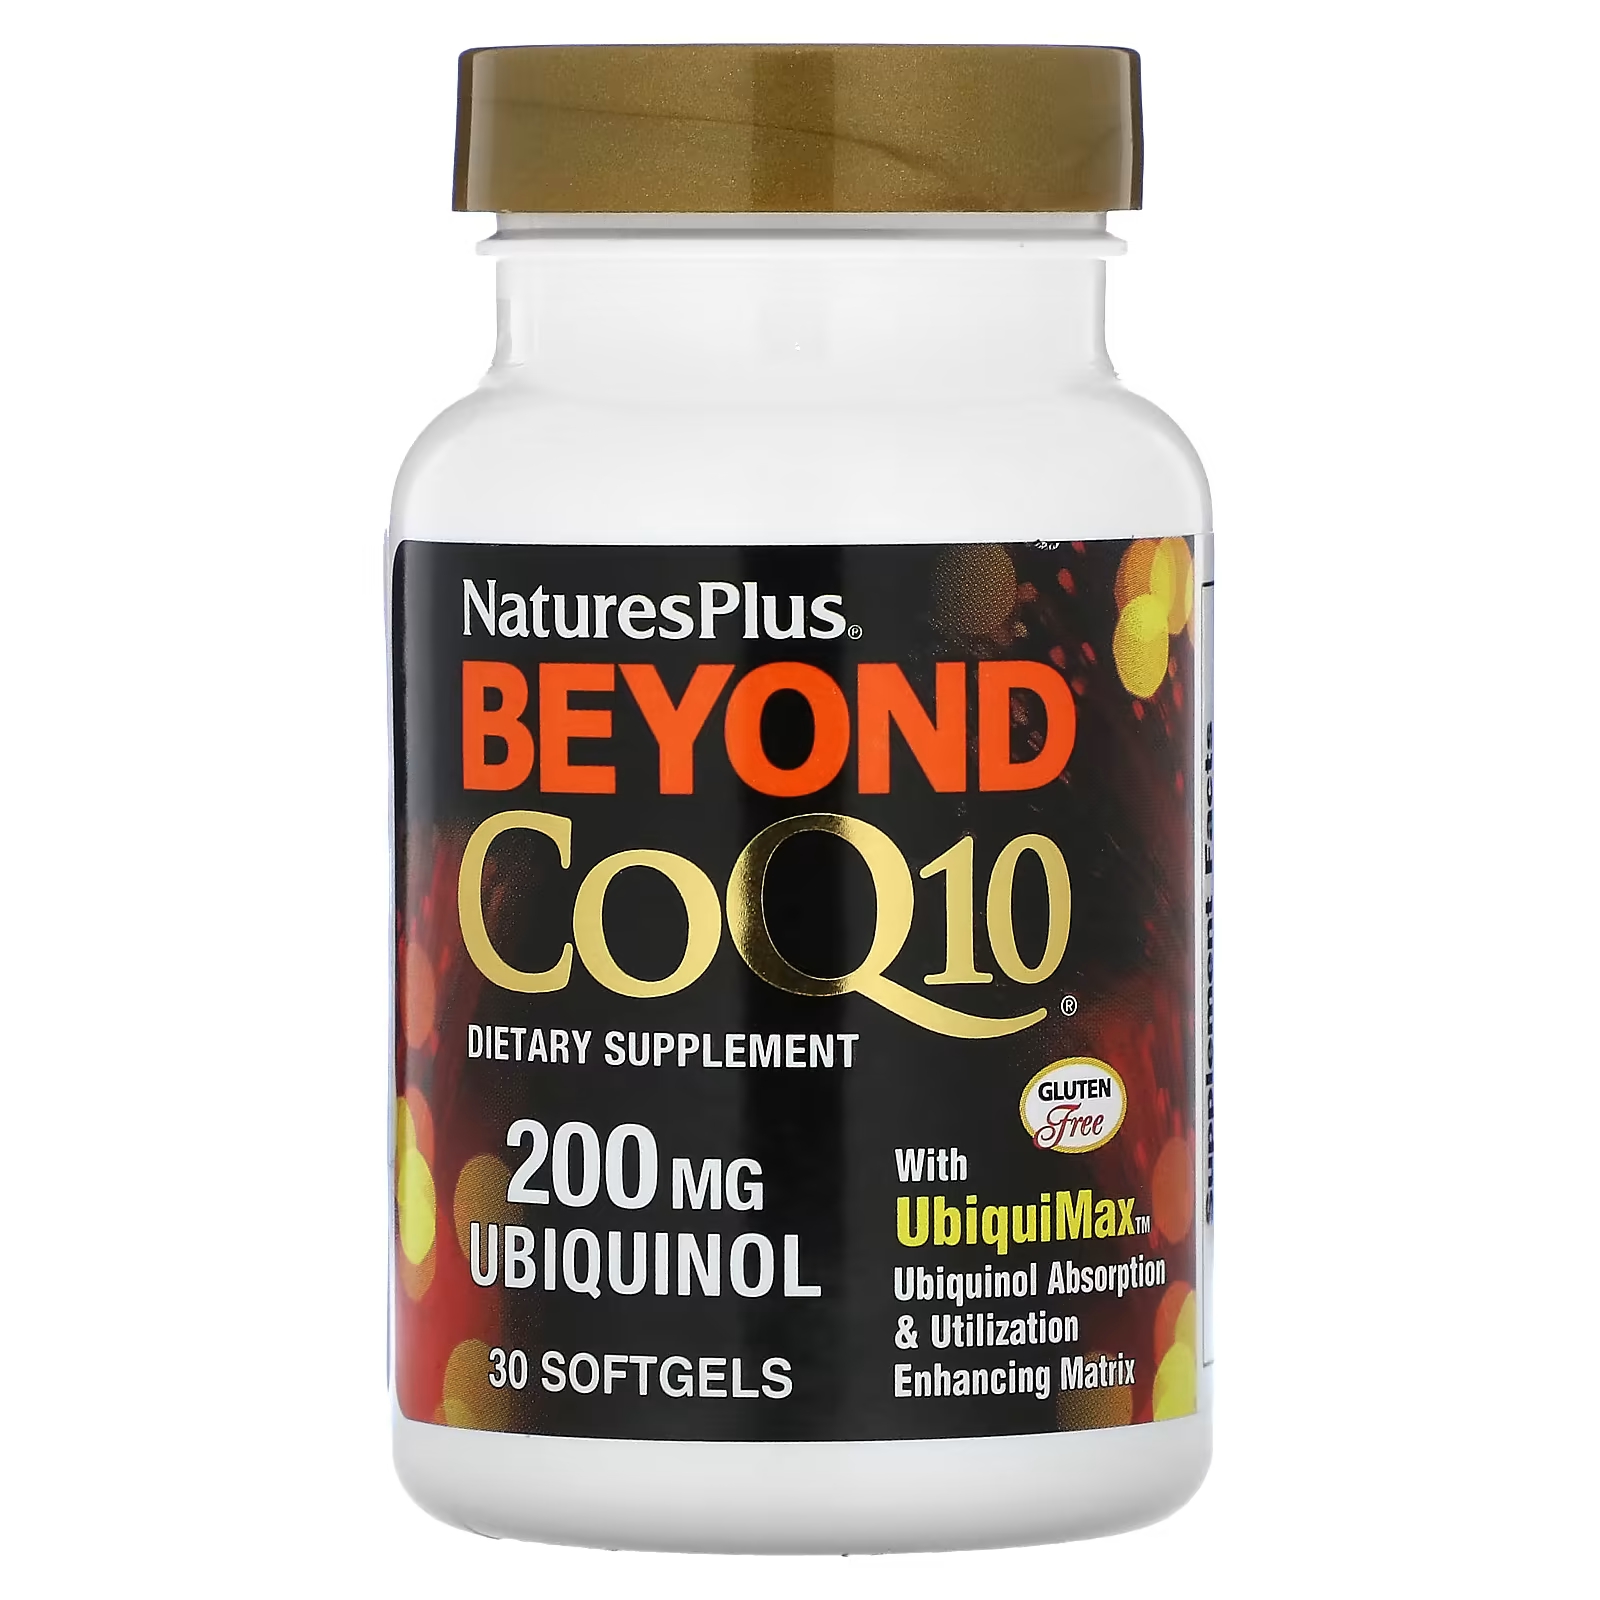 Пищевая добавка NaturesPlus Beyond CoQ10, 200 мг, 30 мягких таблеток naturesplus heartbeat поддержка сердечно сосудистой системы 90 таблеток в форме сердца